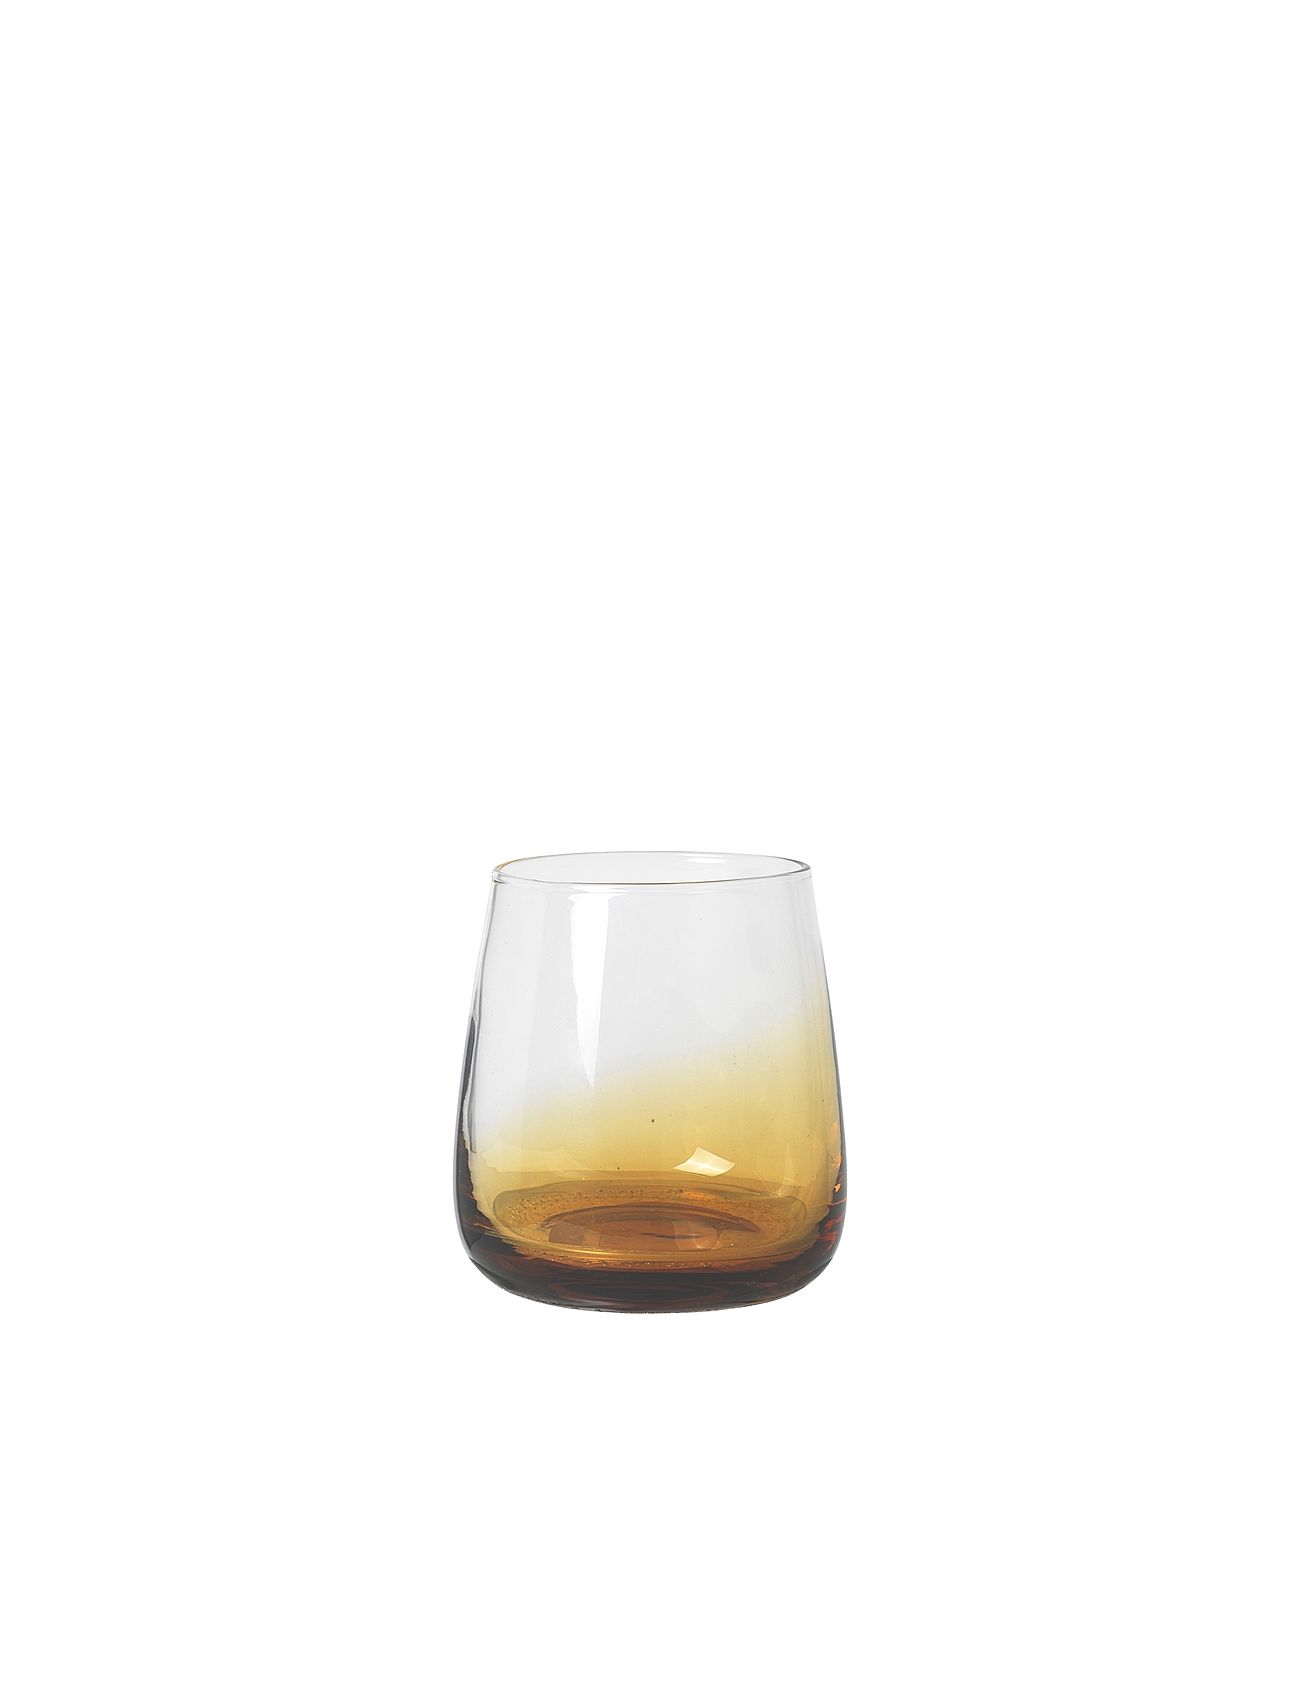 Drikkeglas 'Amber' Glas Home Tableware Glass Drinking Glass Nude Broste Copenhagen